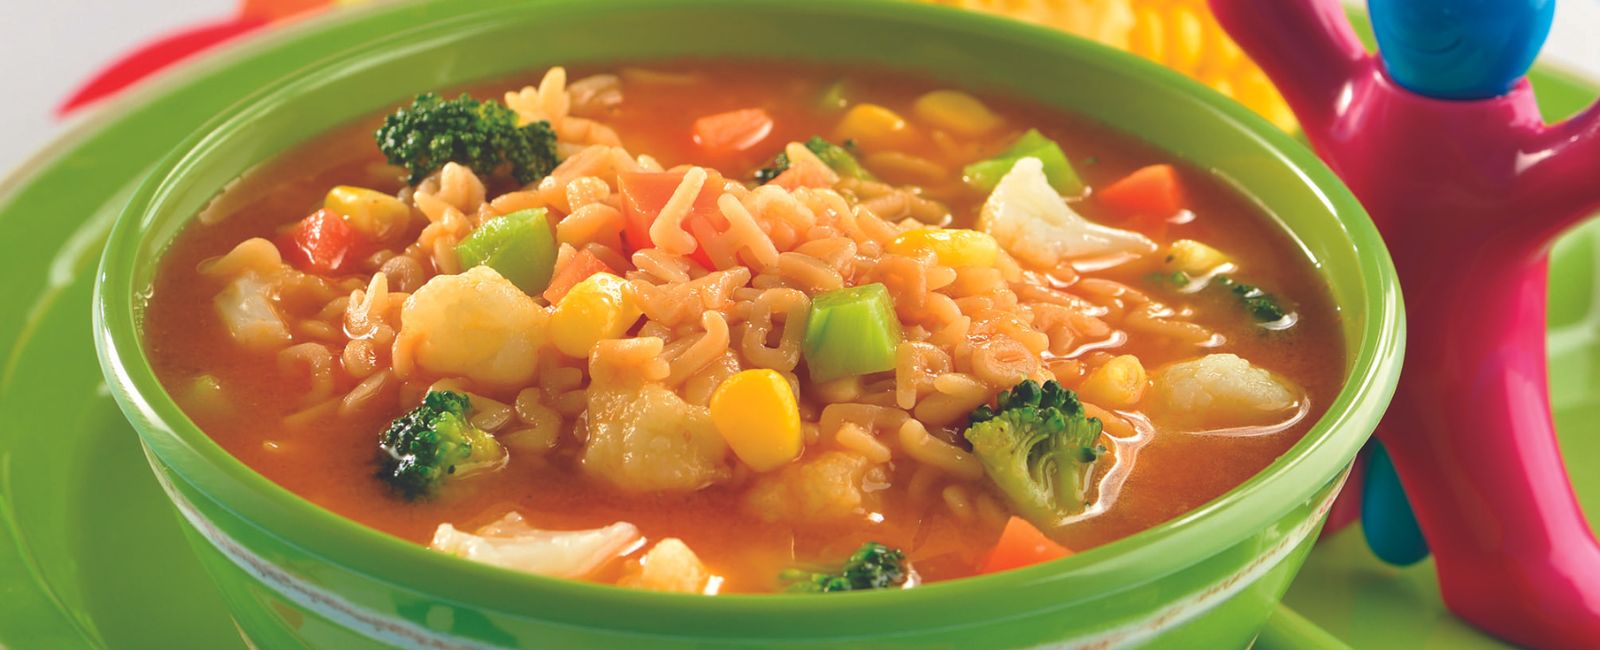 Alphabet Soup with Vegetable Garnish